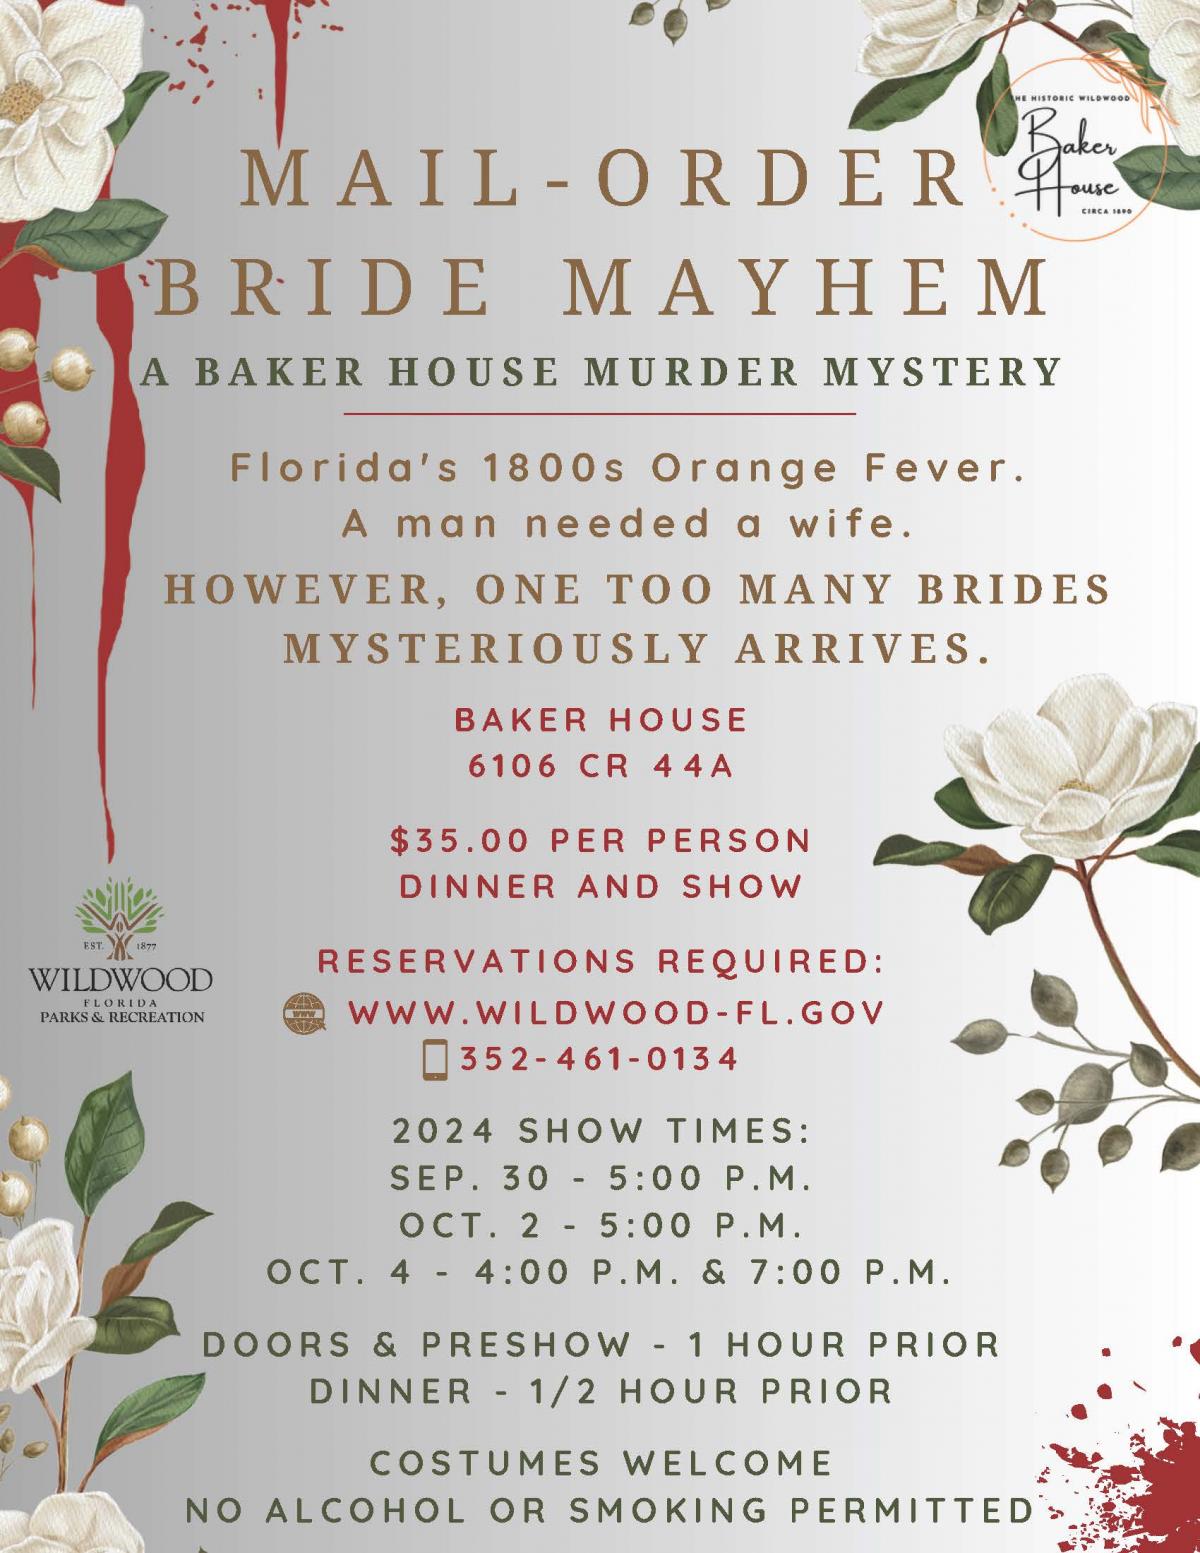 Murder Mystery Mail Order Bride Mayhem, Baker House 6106 CR 44A, Wildwood, Fl 34785, September 30, October 2, 4, 2024